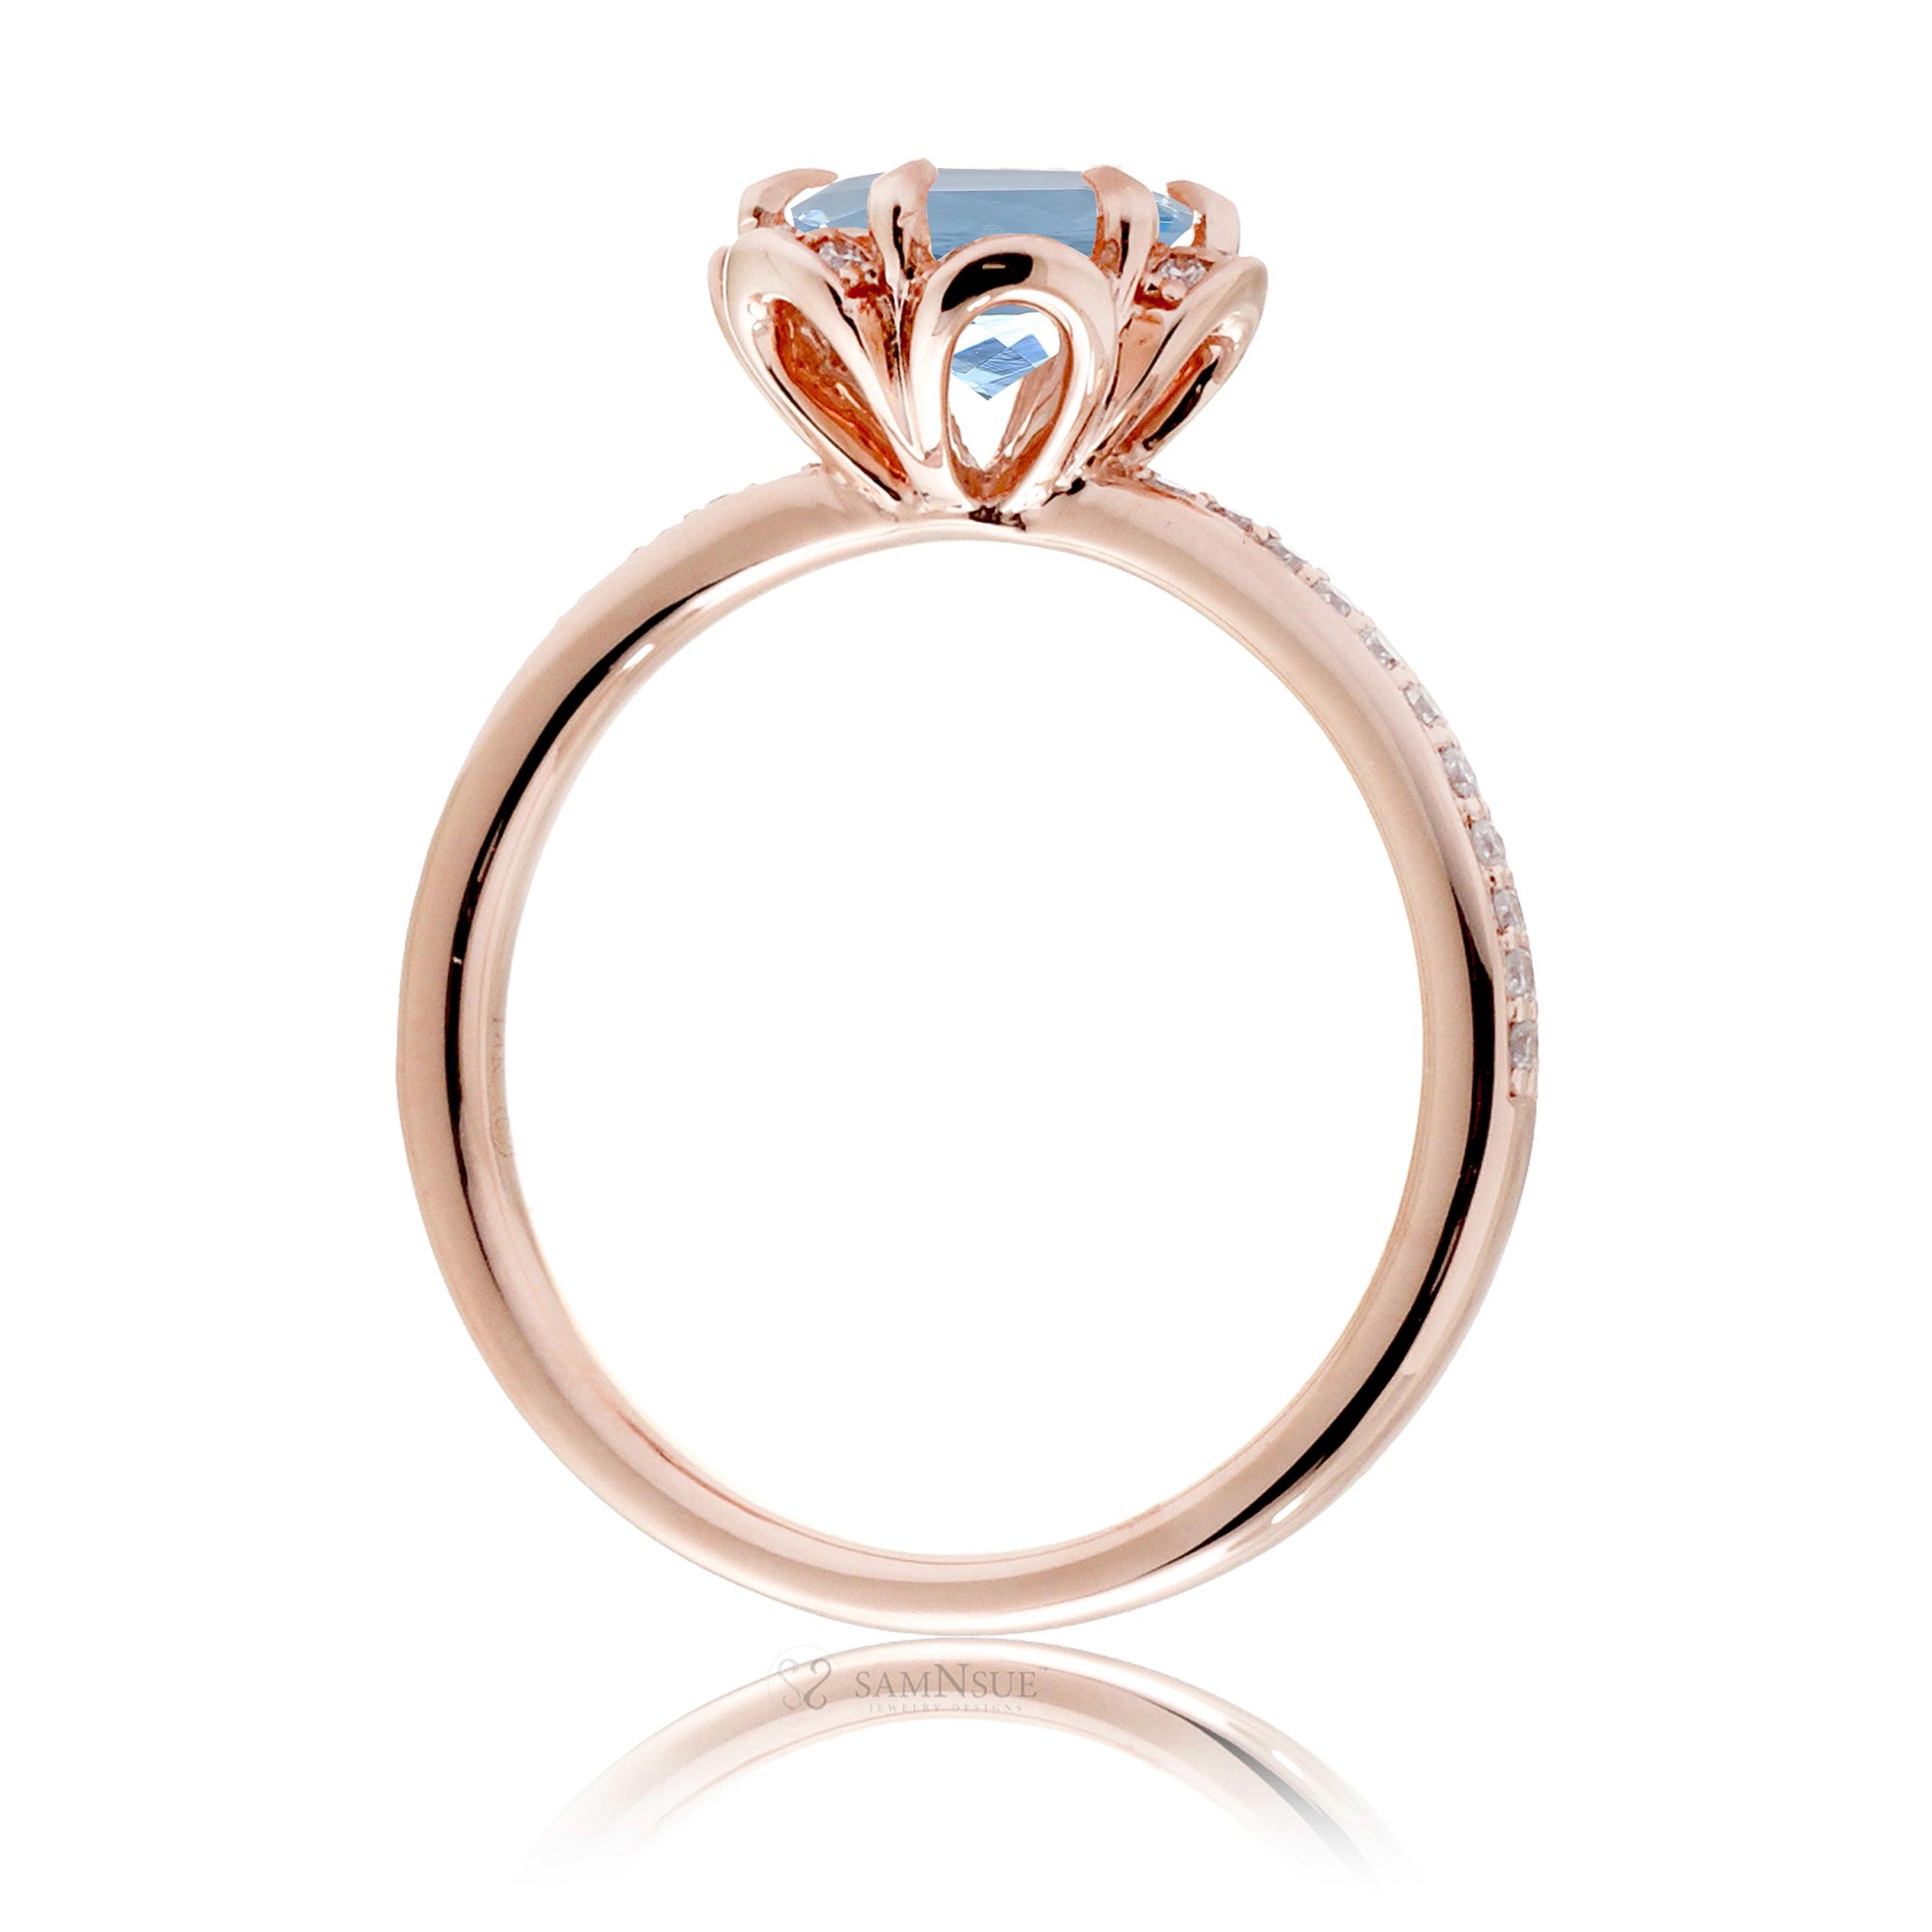 Aquamarine ring March birthstone diamond accent rose gold